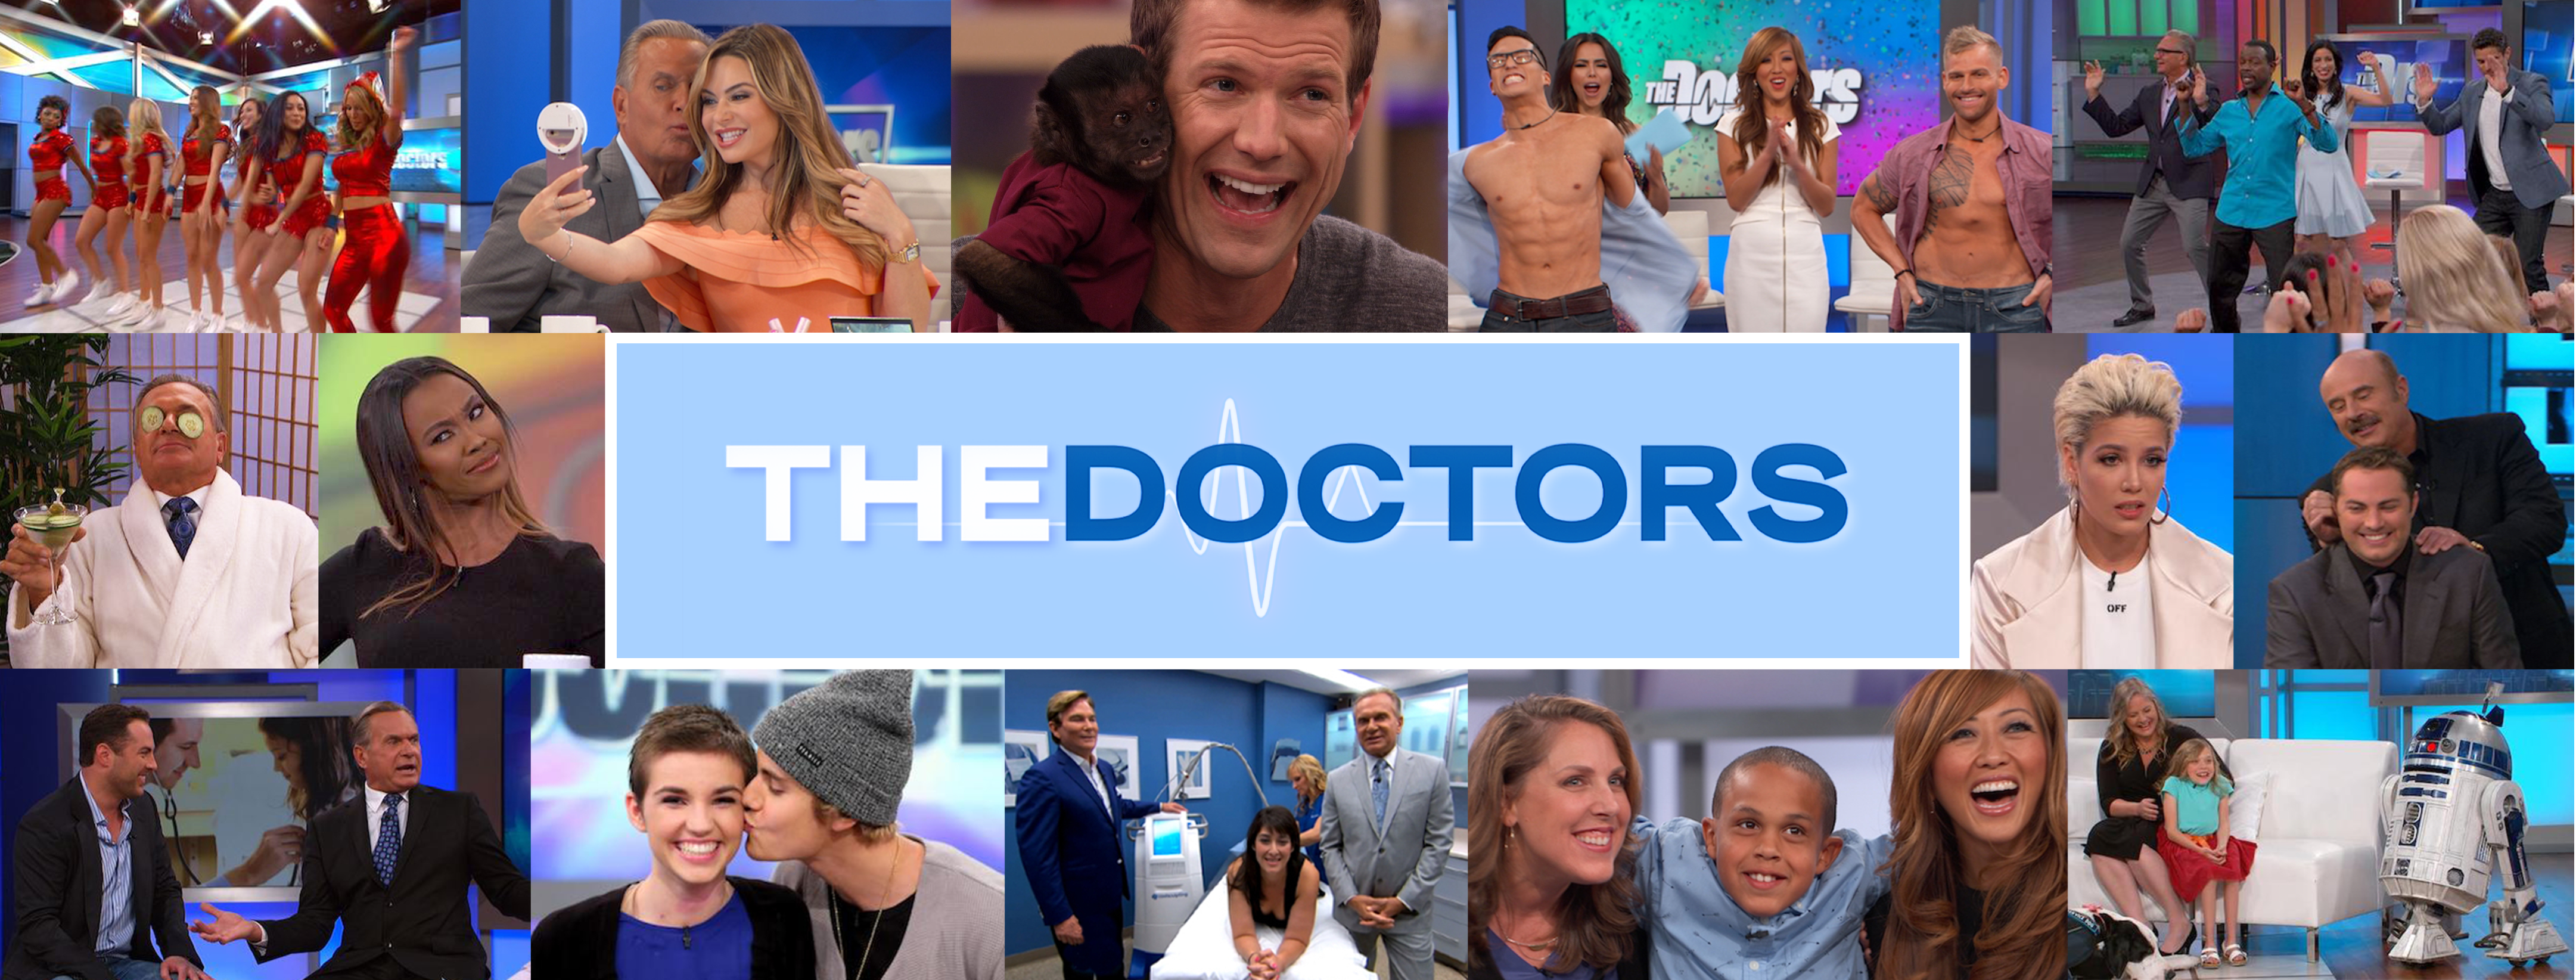 Ty's Endoscopy | The Doctors TV Show